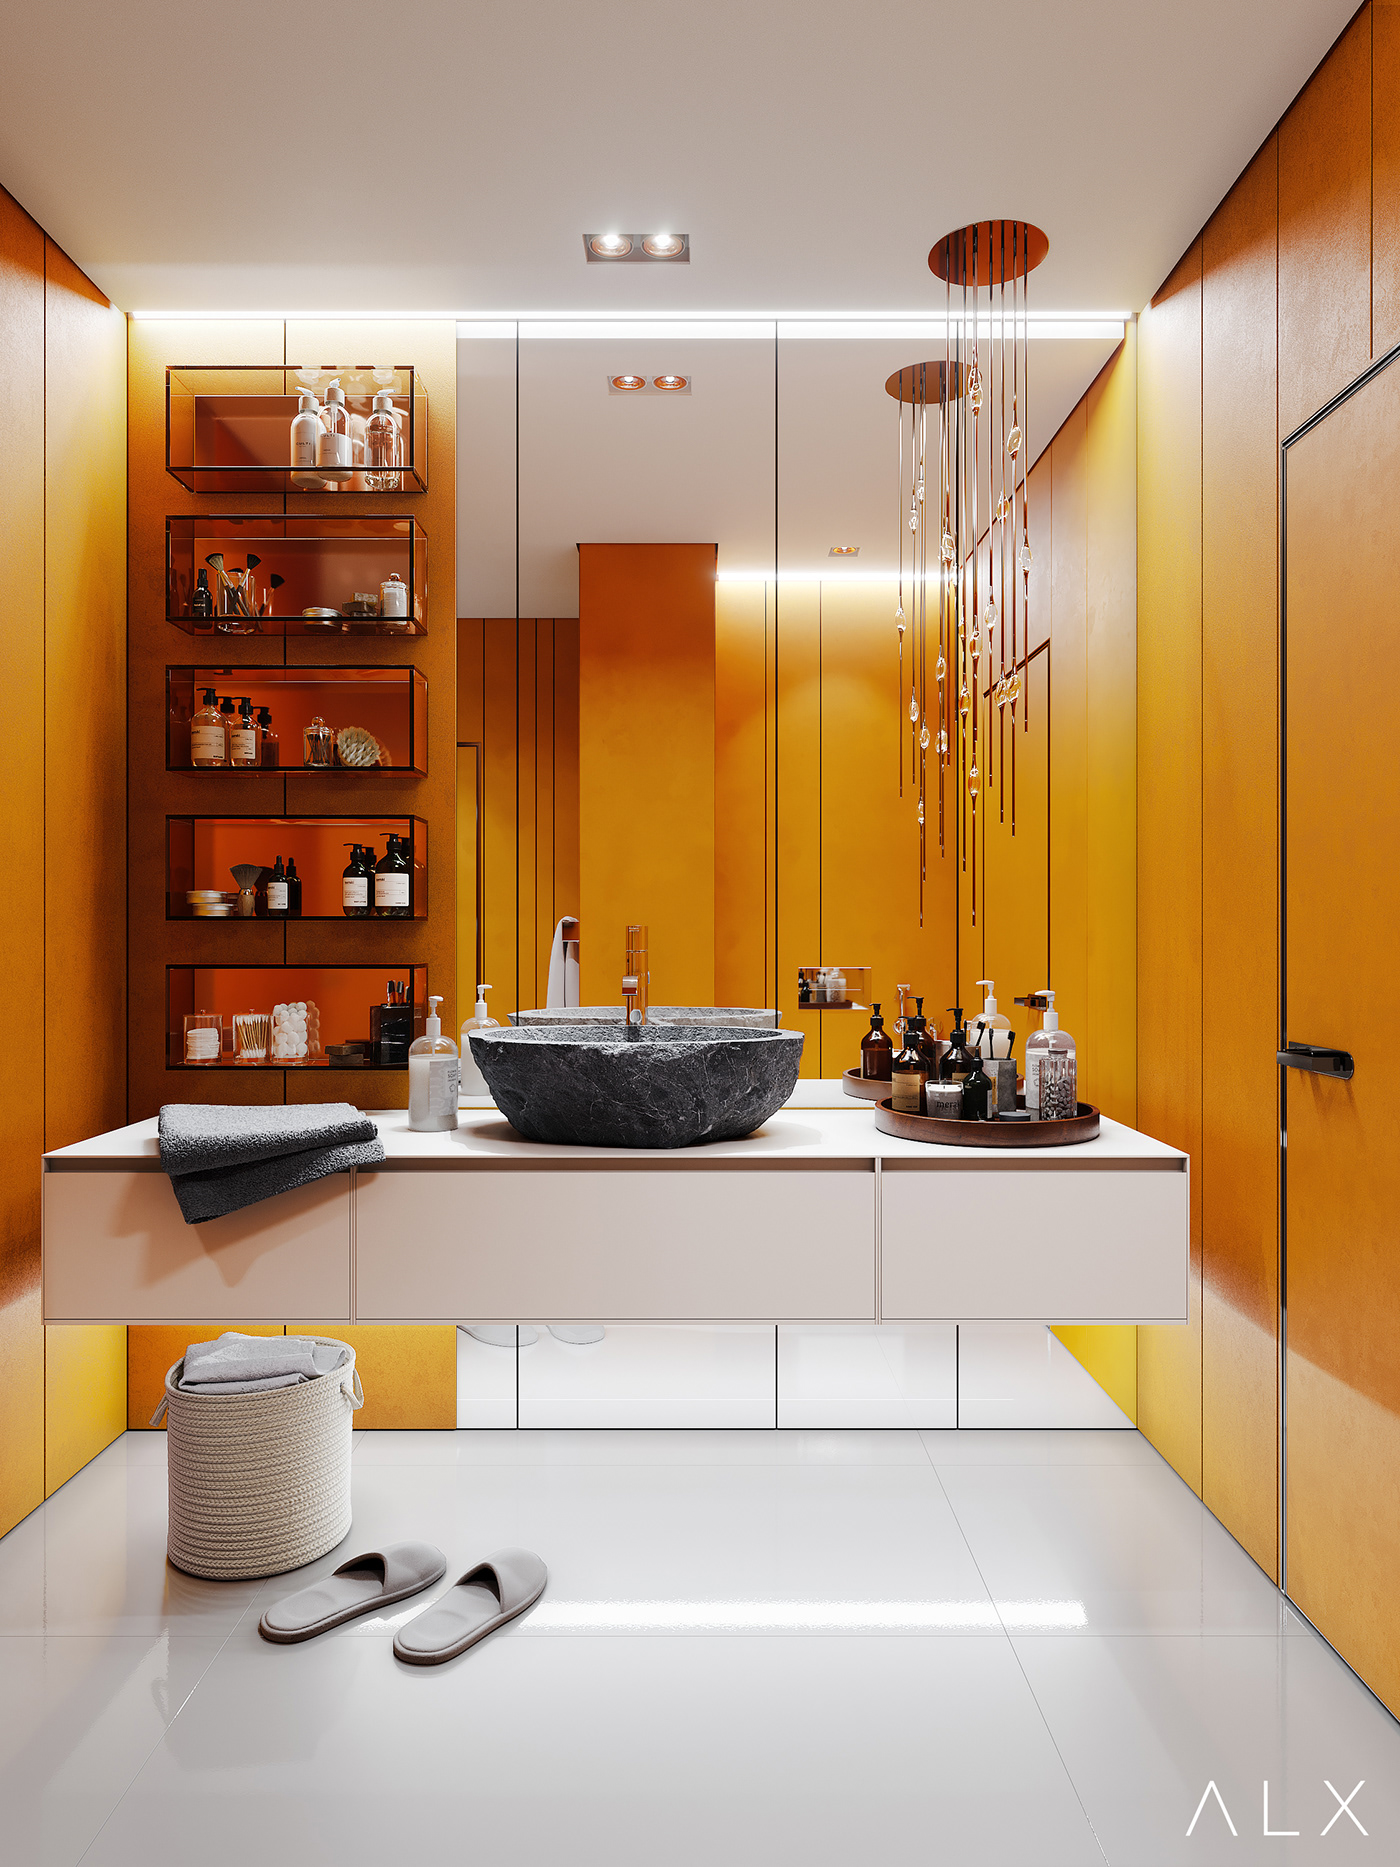 architecture Interior bathroom design CGI visualization CoronaRender  colors Minimalism Render